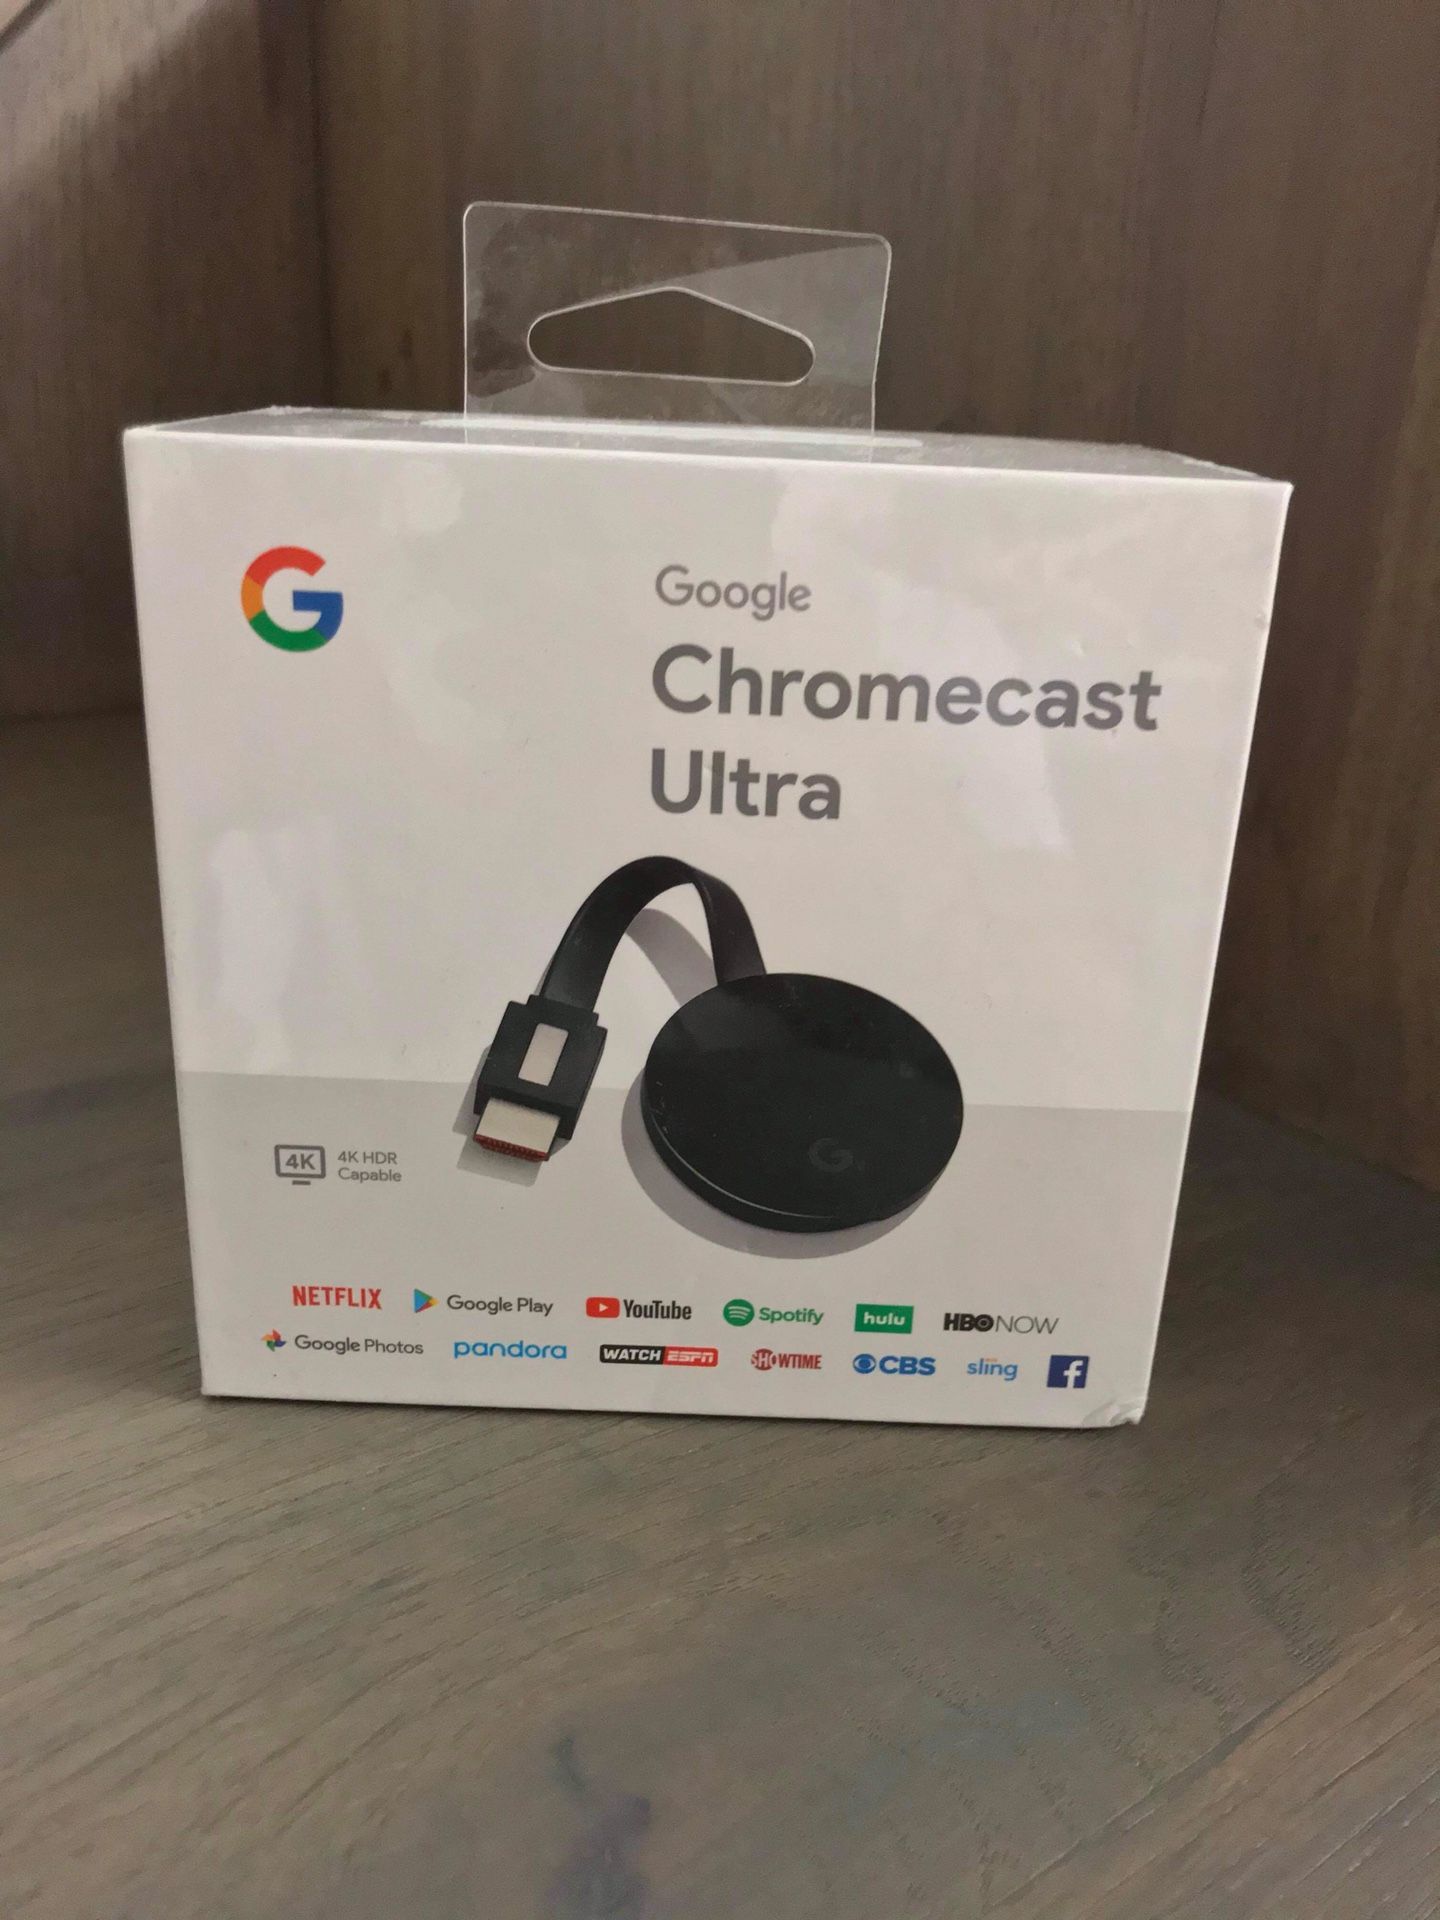 Google Chromecast Ultra streaming device